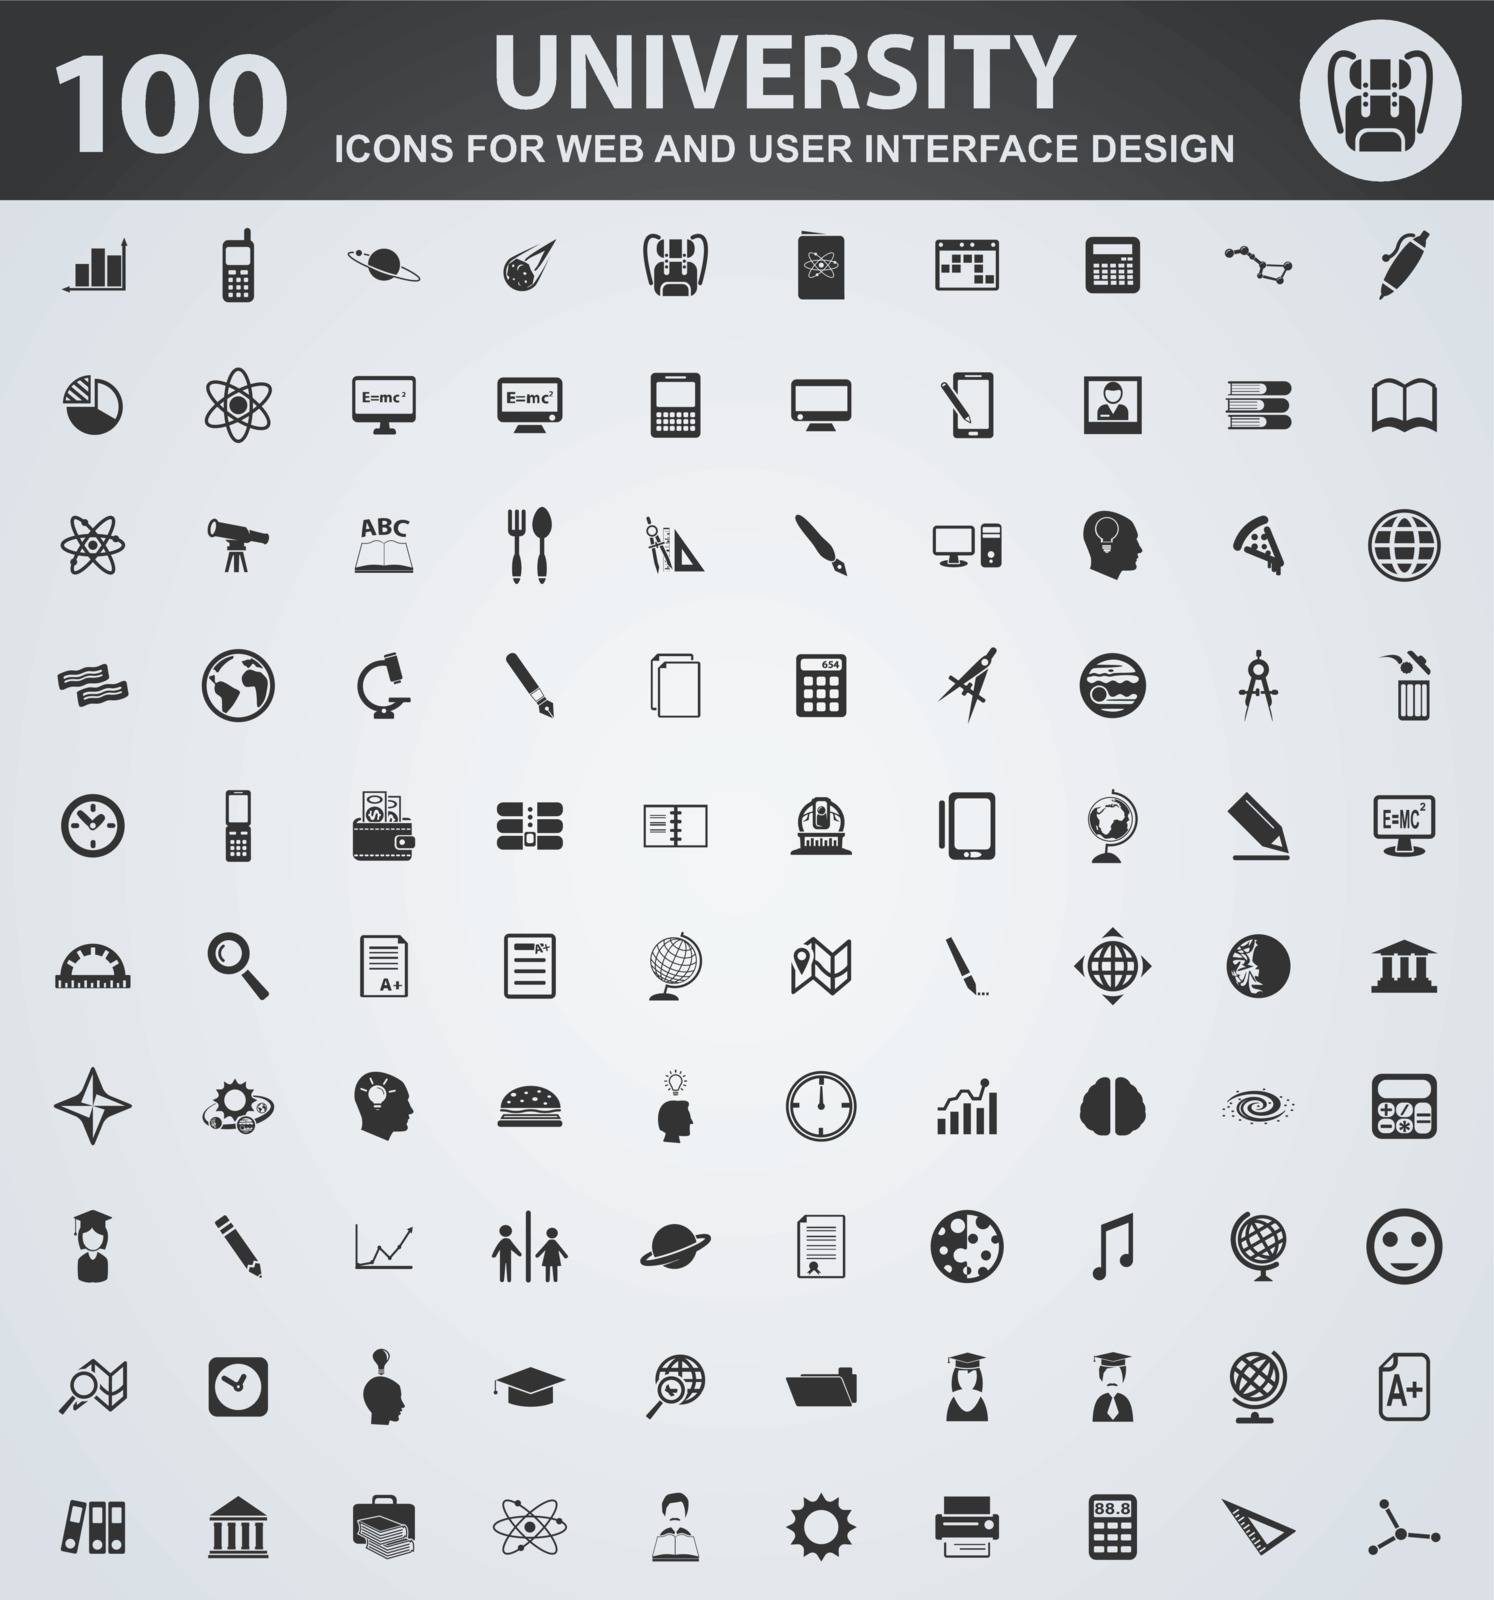 University icons set by ayax